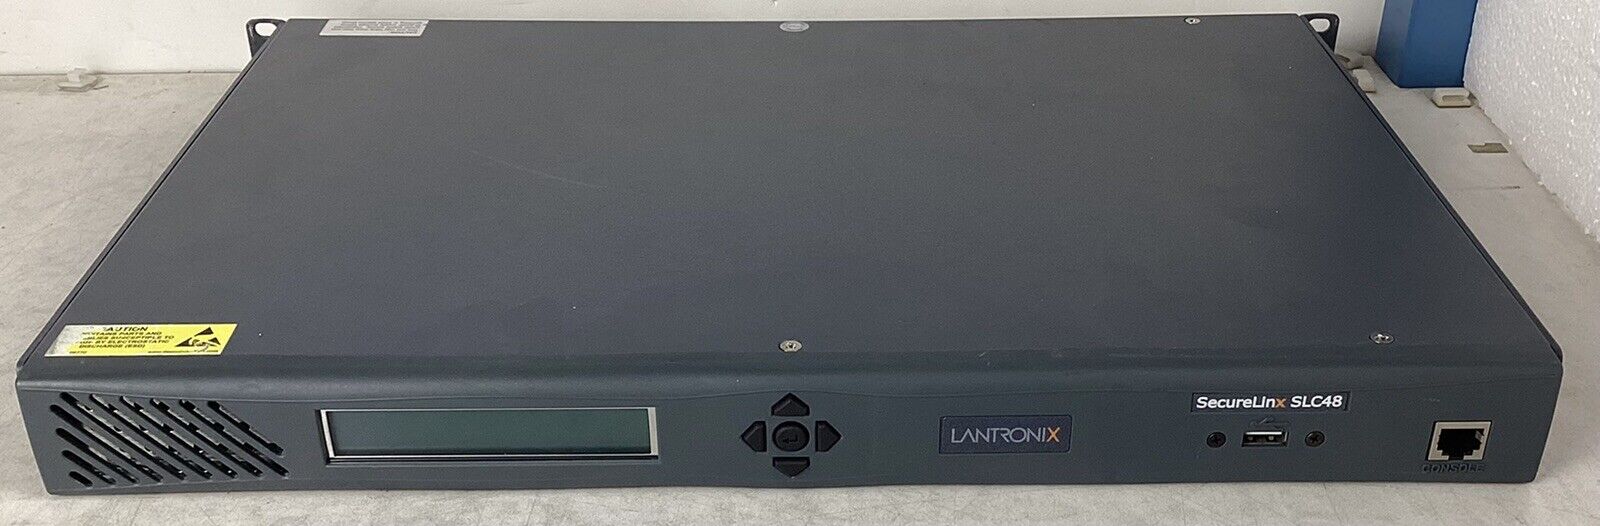 080-440-001-R Lantronix SLC04822N-03 SecureLinx SLC48 48-Port Console Server